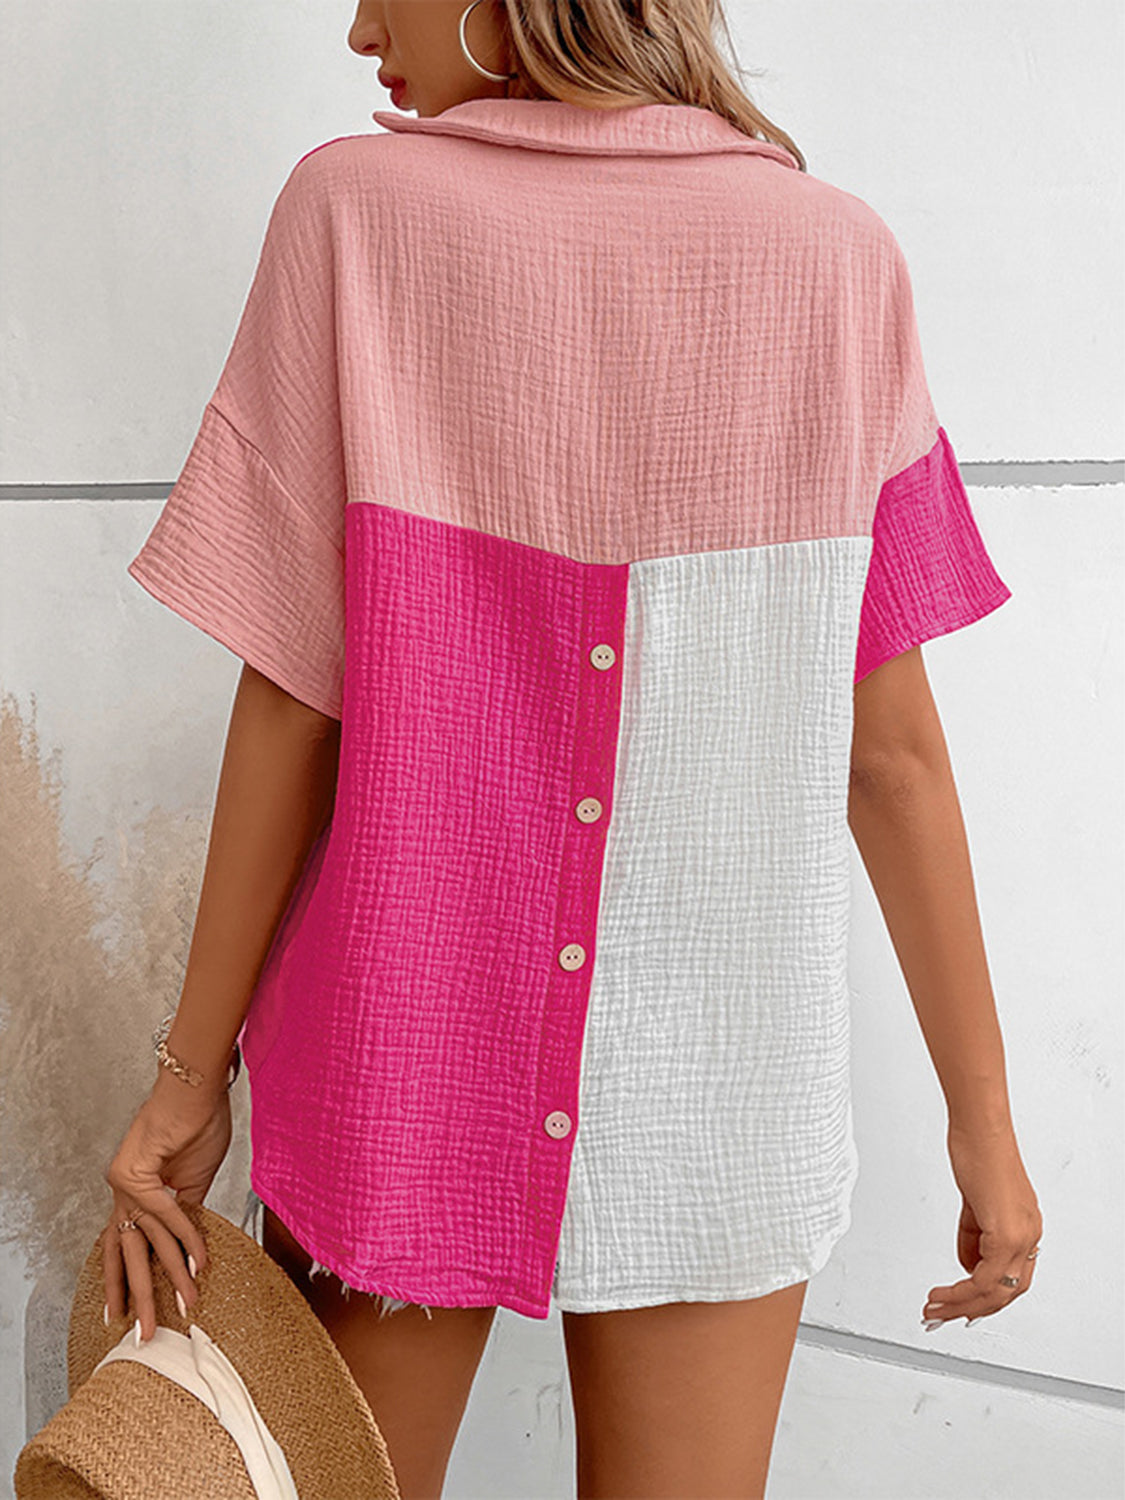 TEEK - Hot Pink Johnny Collar Short Sleeve Blouse TOPS TEEK Trend   